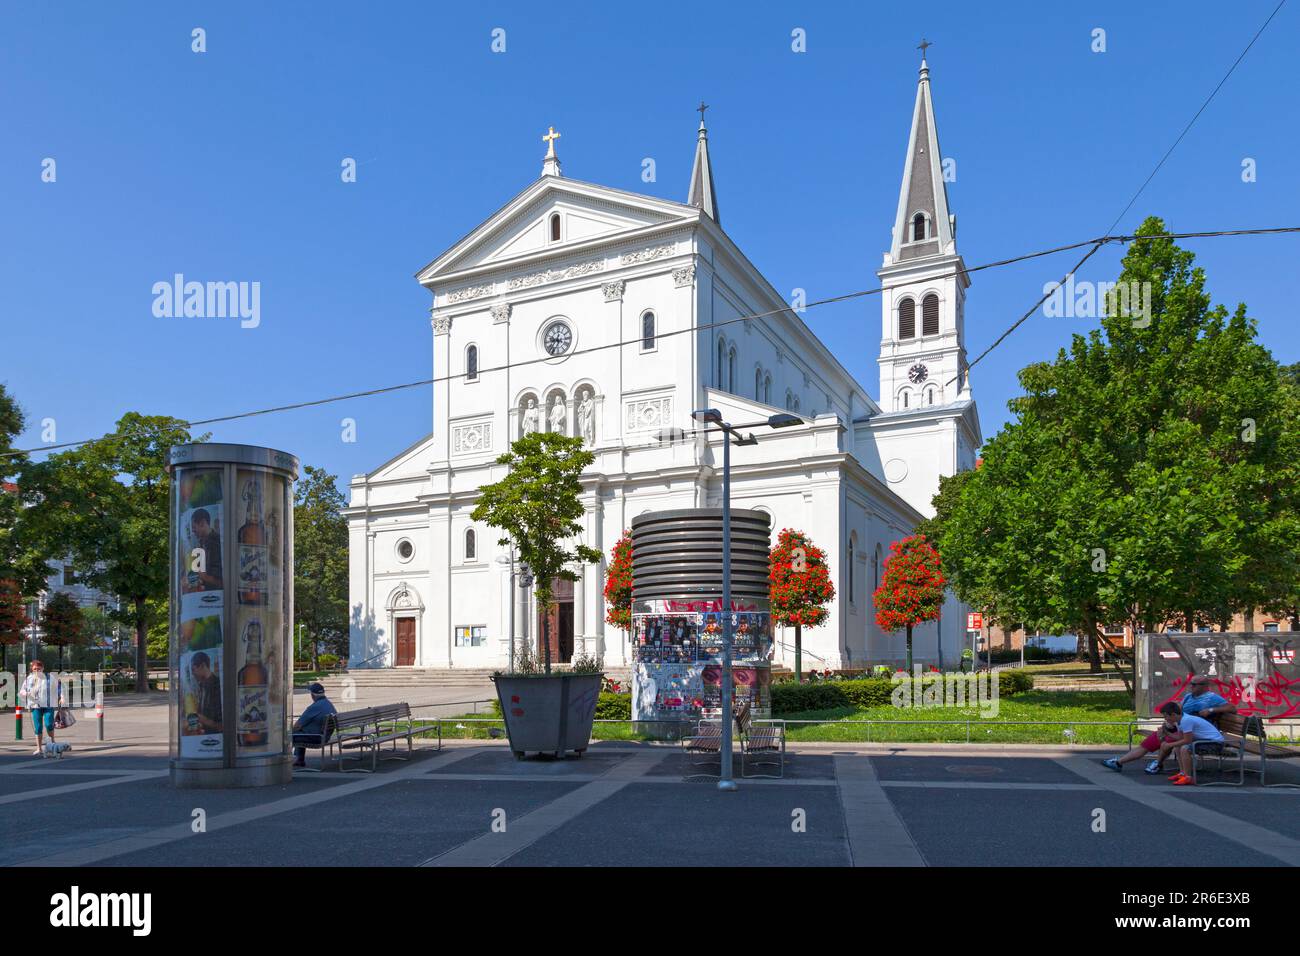 Vienna, Austria - June 17 2018: Parish church of St. Johann the Evangelist (German: Pfarrkirche St. Johann) located in Favoriten, the 10th district of Stock Photo